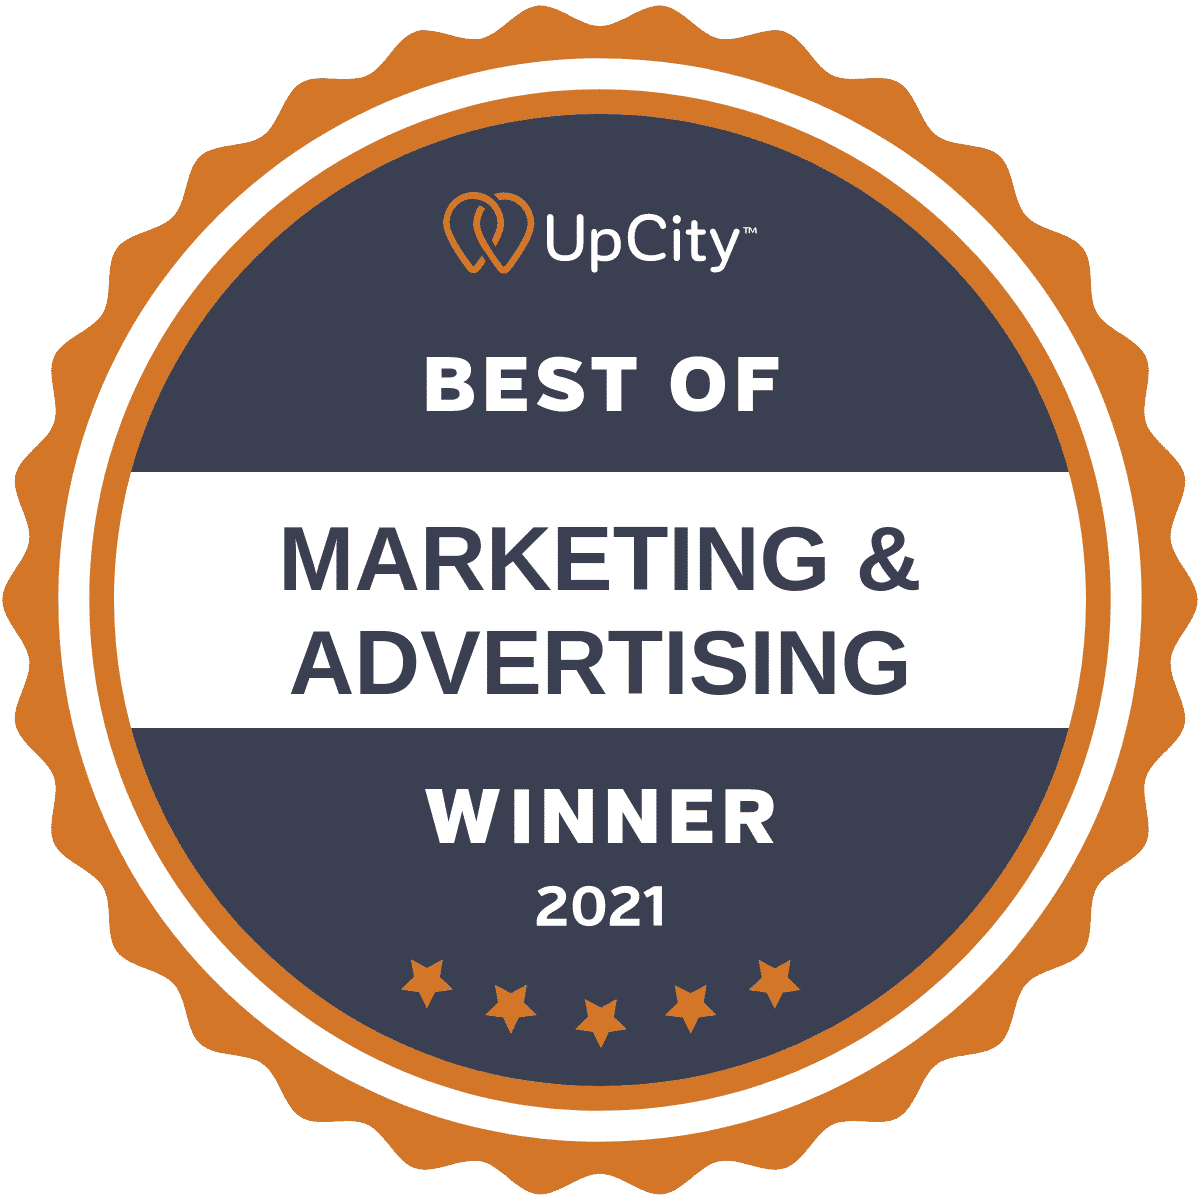 UpCity Best of Marketing & Advertising Winner 2021